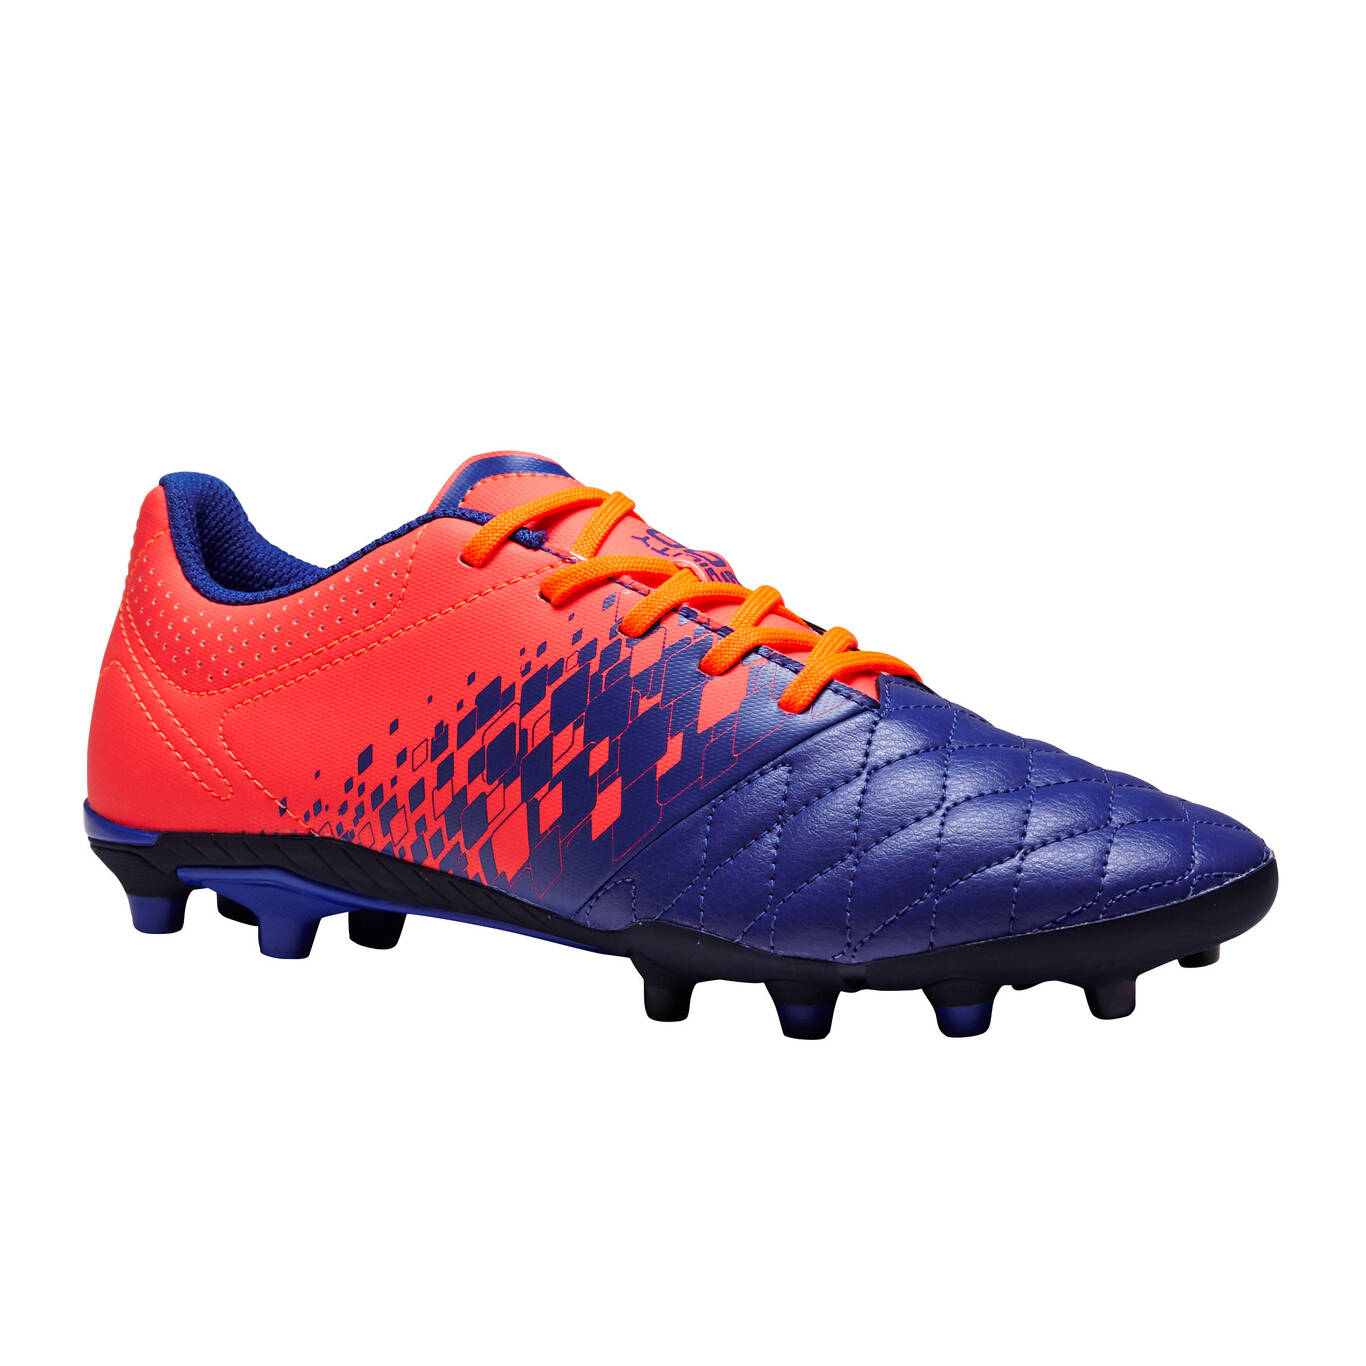 Agility 500 FG Kids' Dry Pitch Football Boots - Blue/Orange